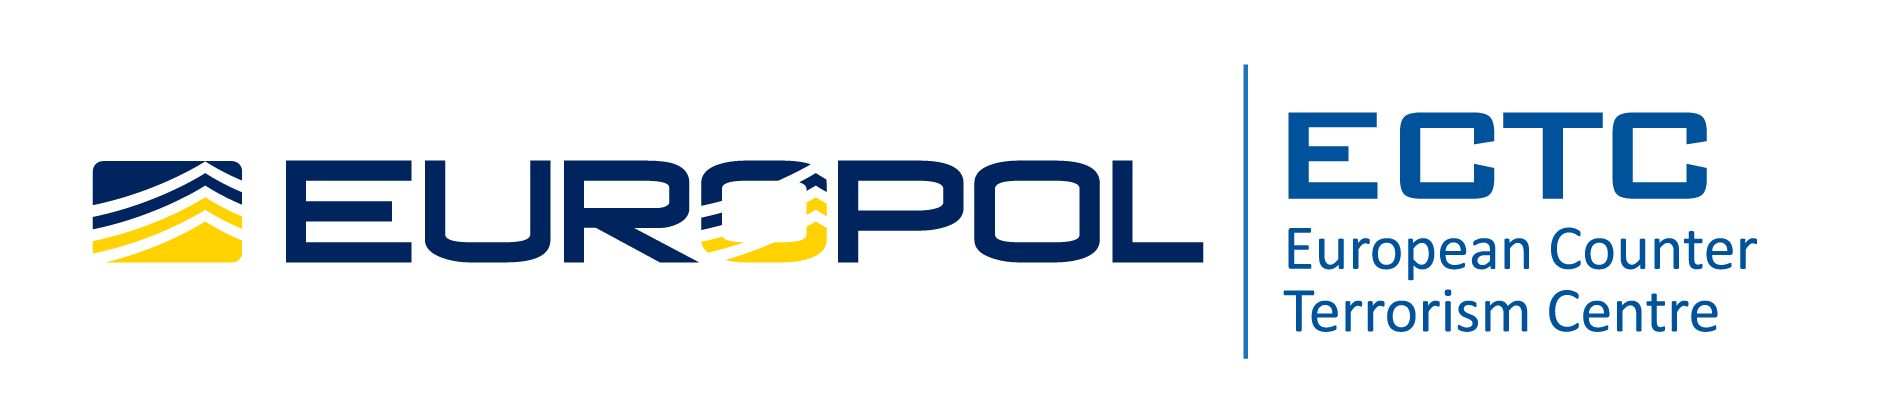 Terrorism Logo - European Counter Terrorism Centre - ECTC | About Europol | Europol